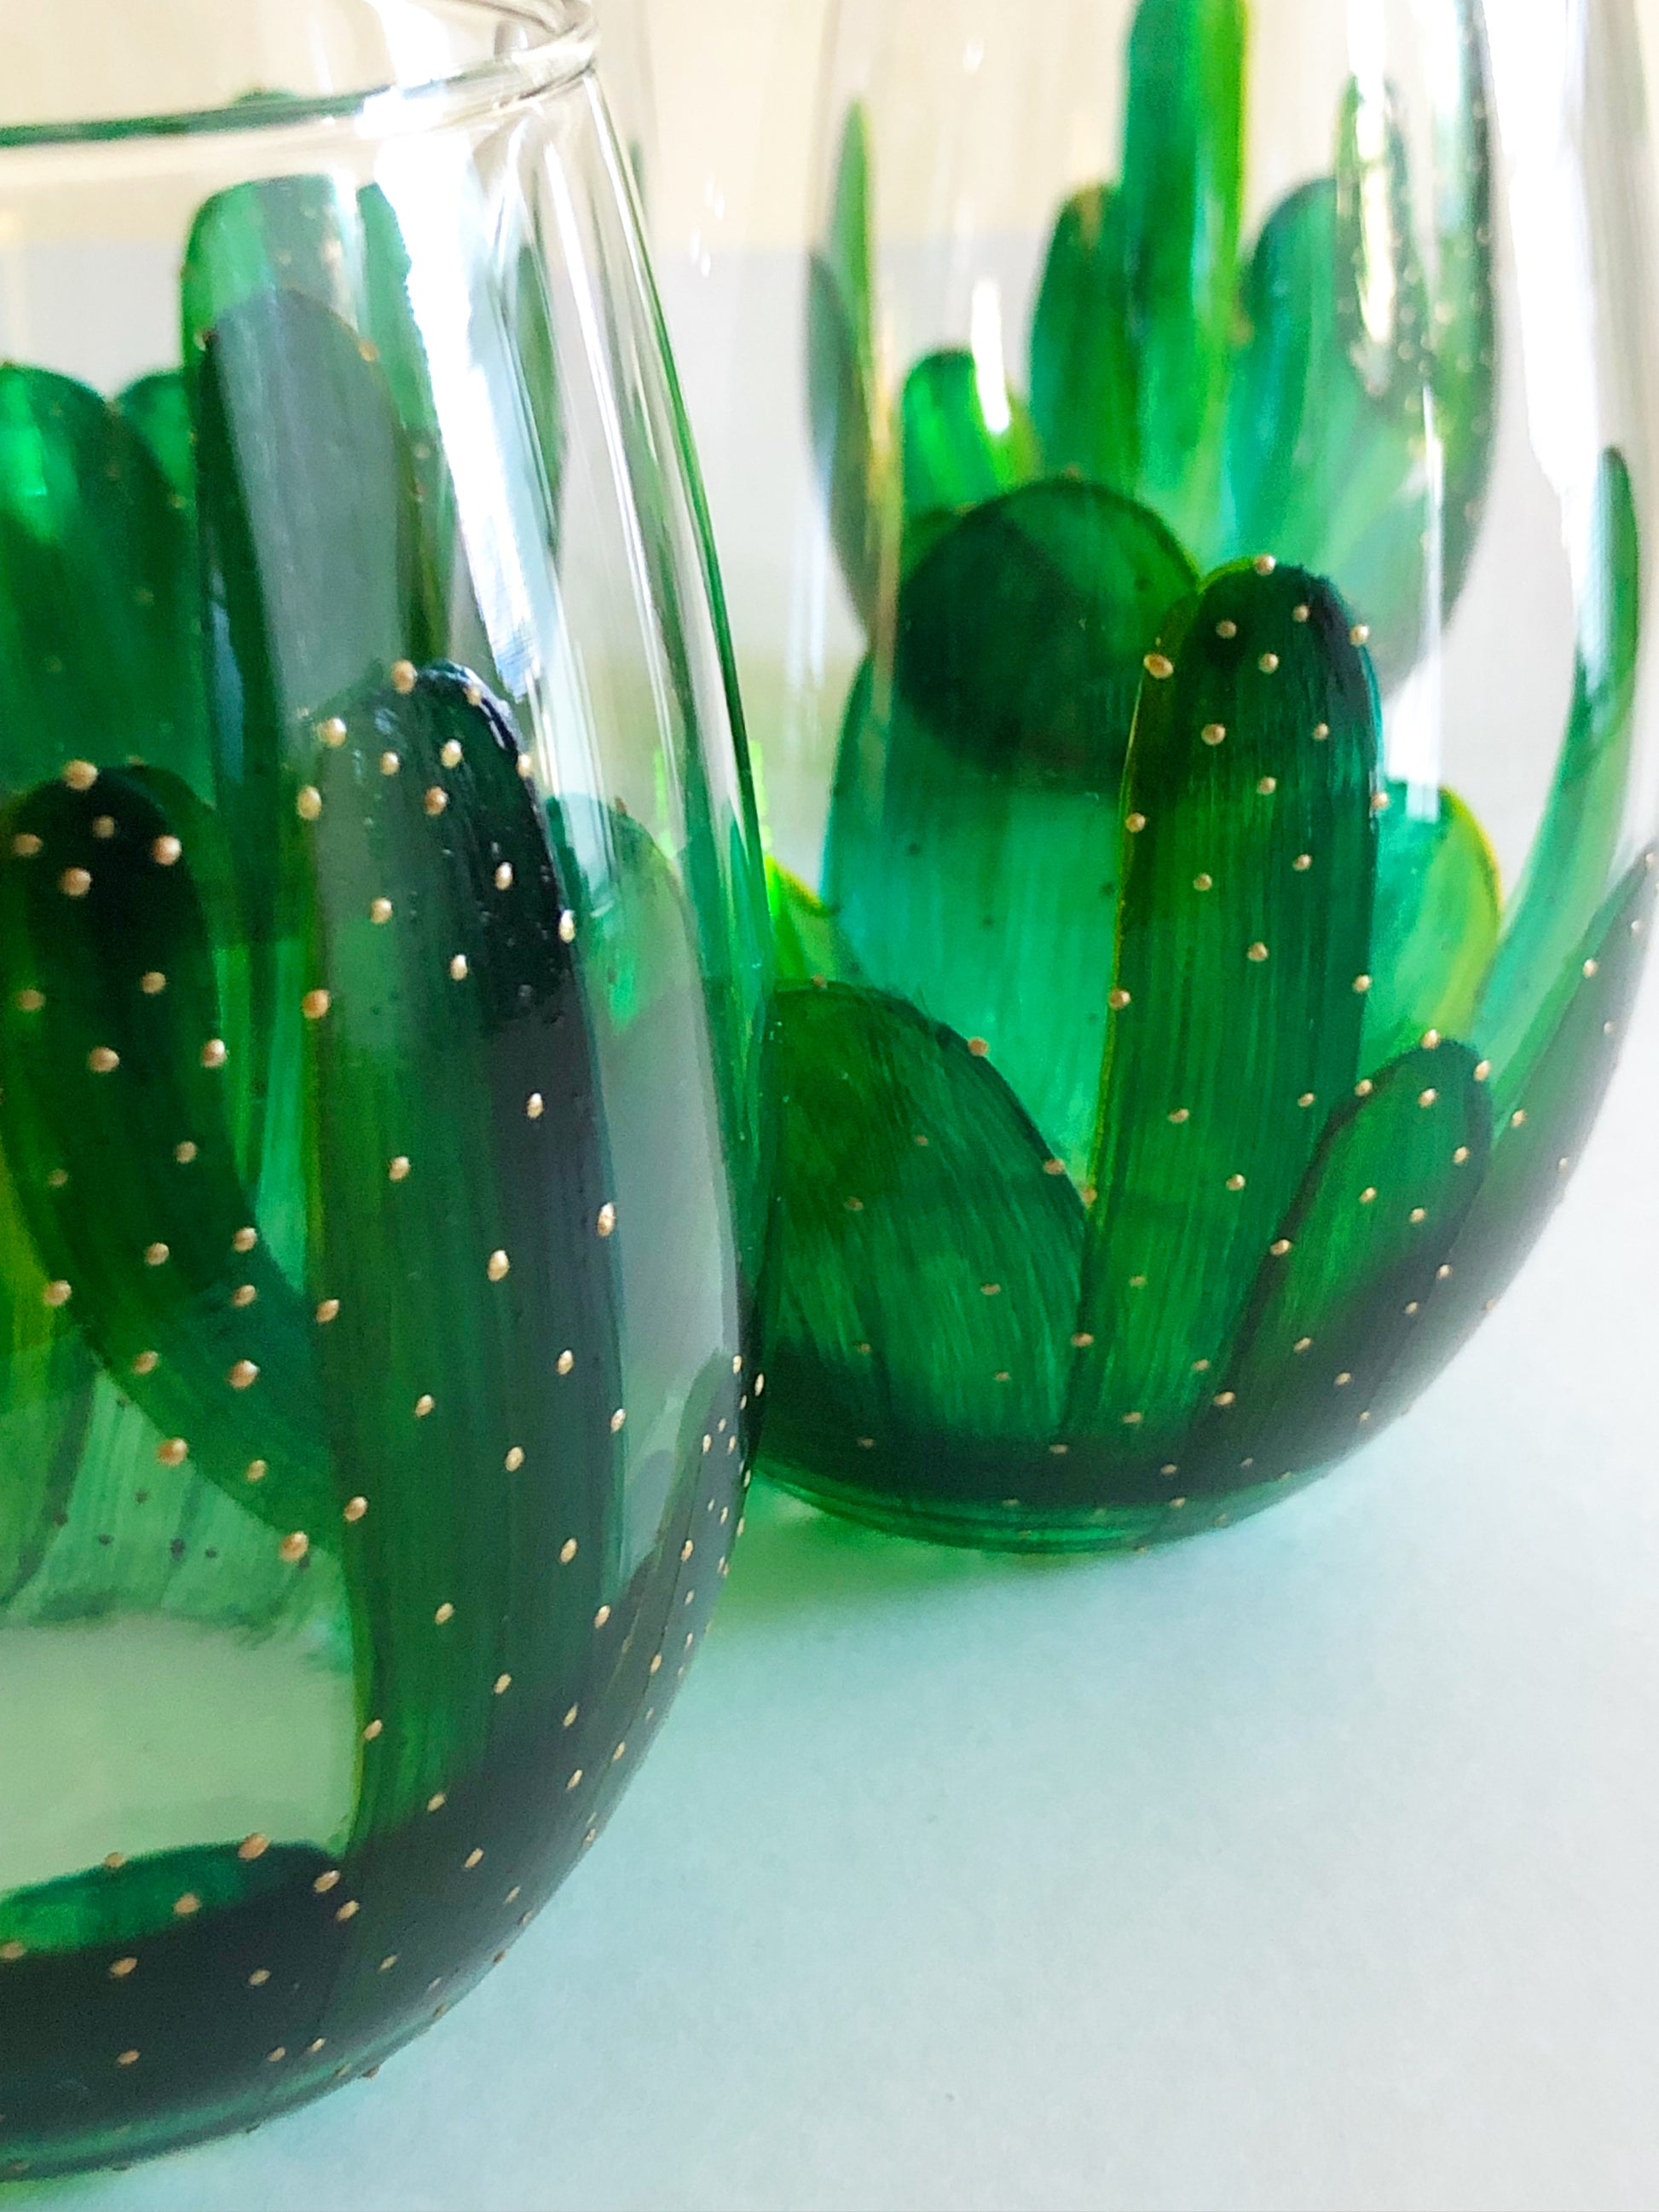 Cactus Stemmed Wine Glasses, Succulent Wine Glasses, Hand Painted